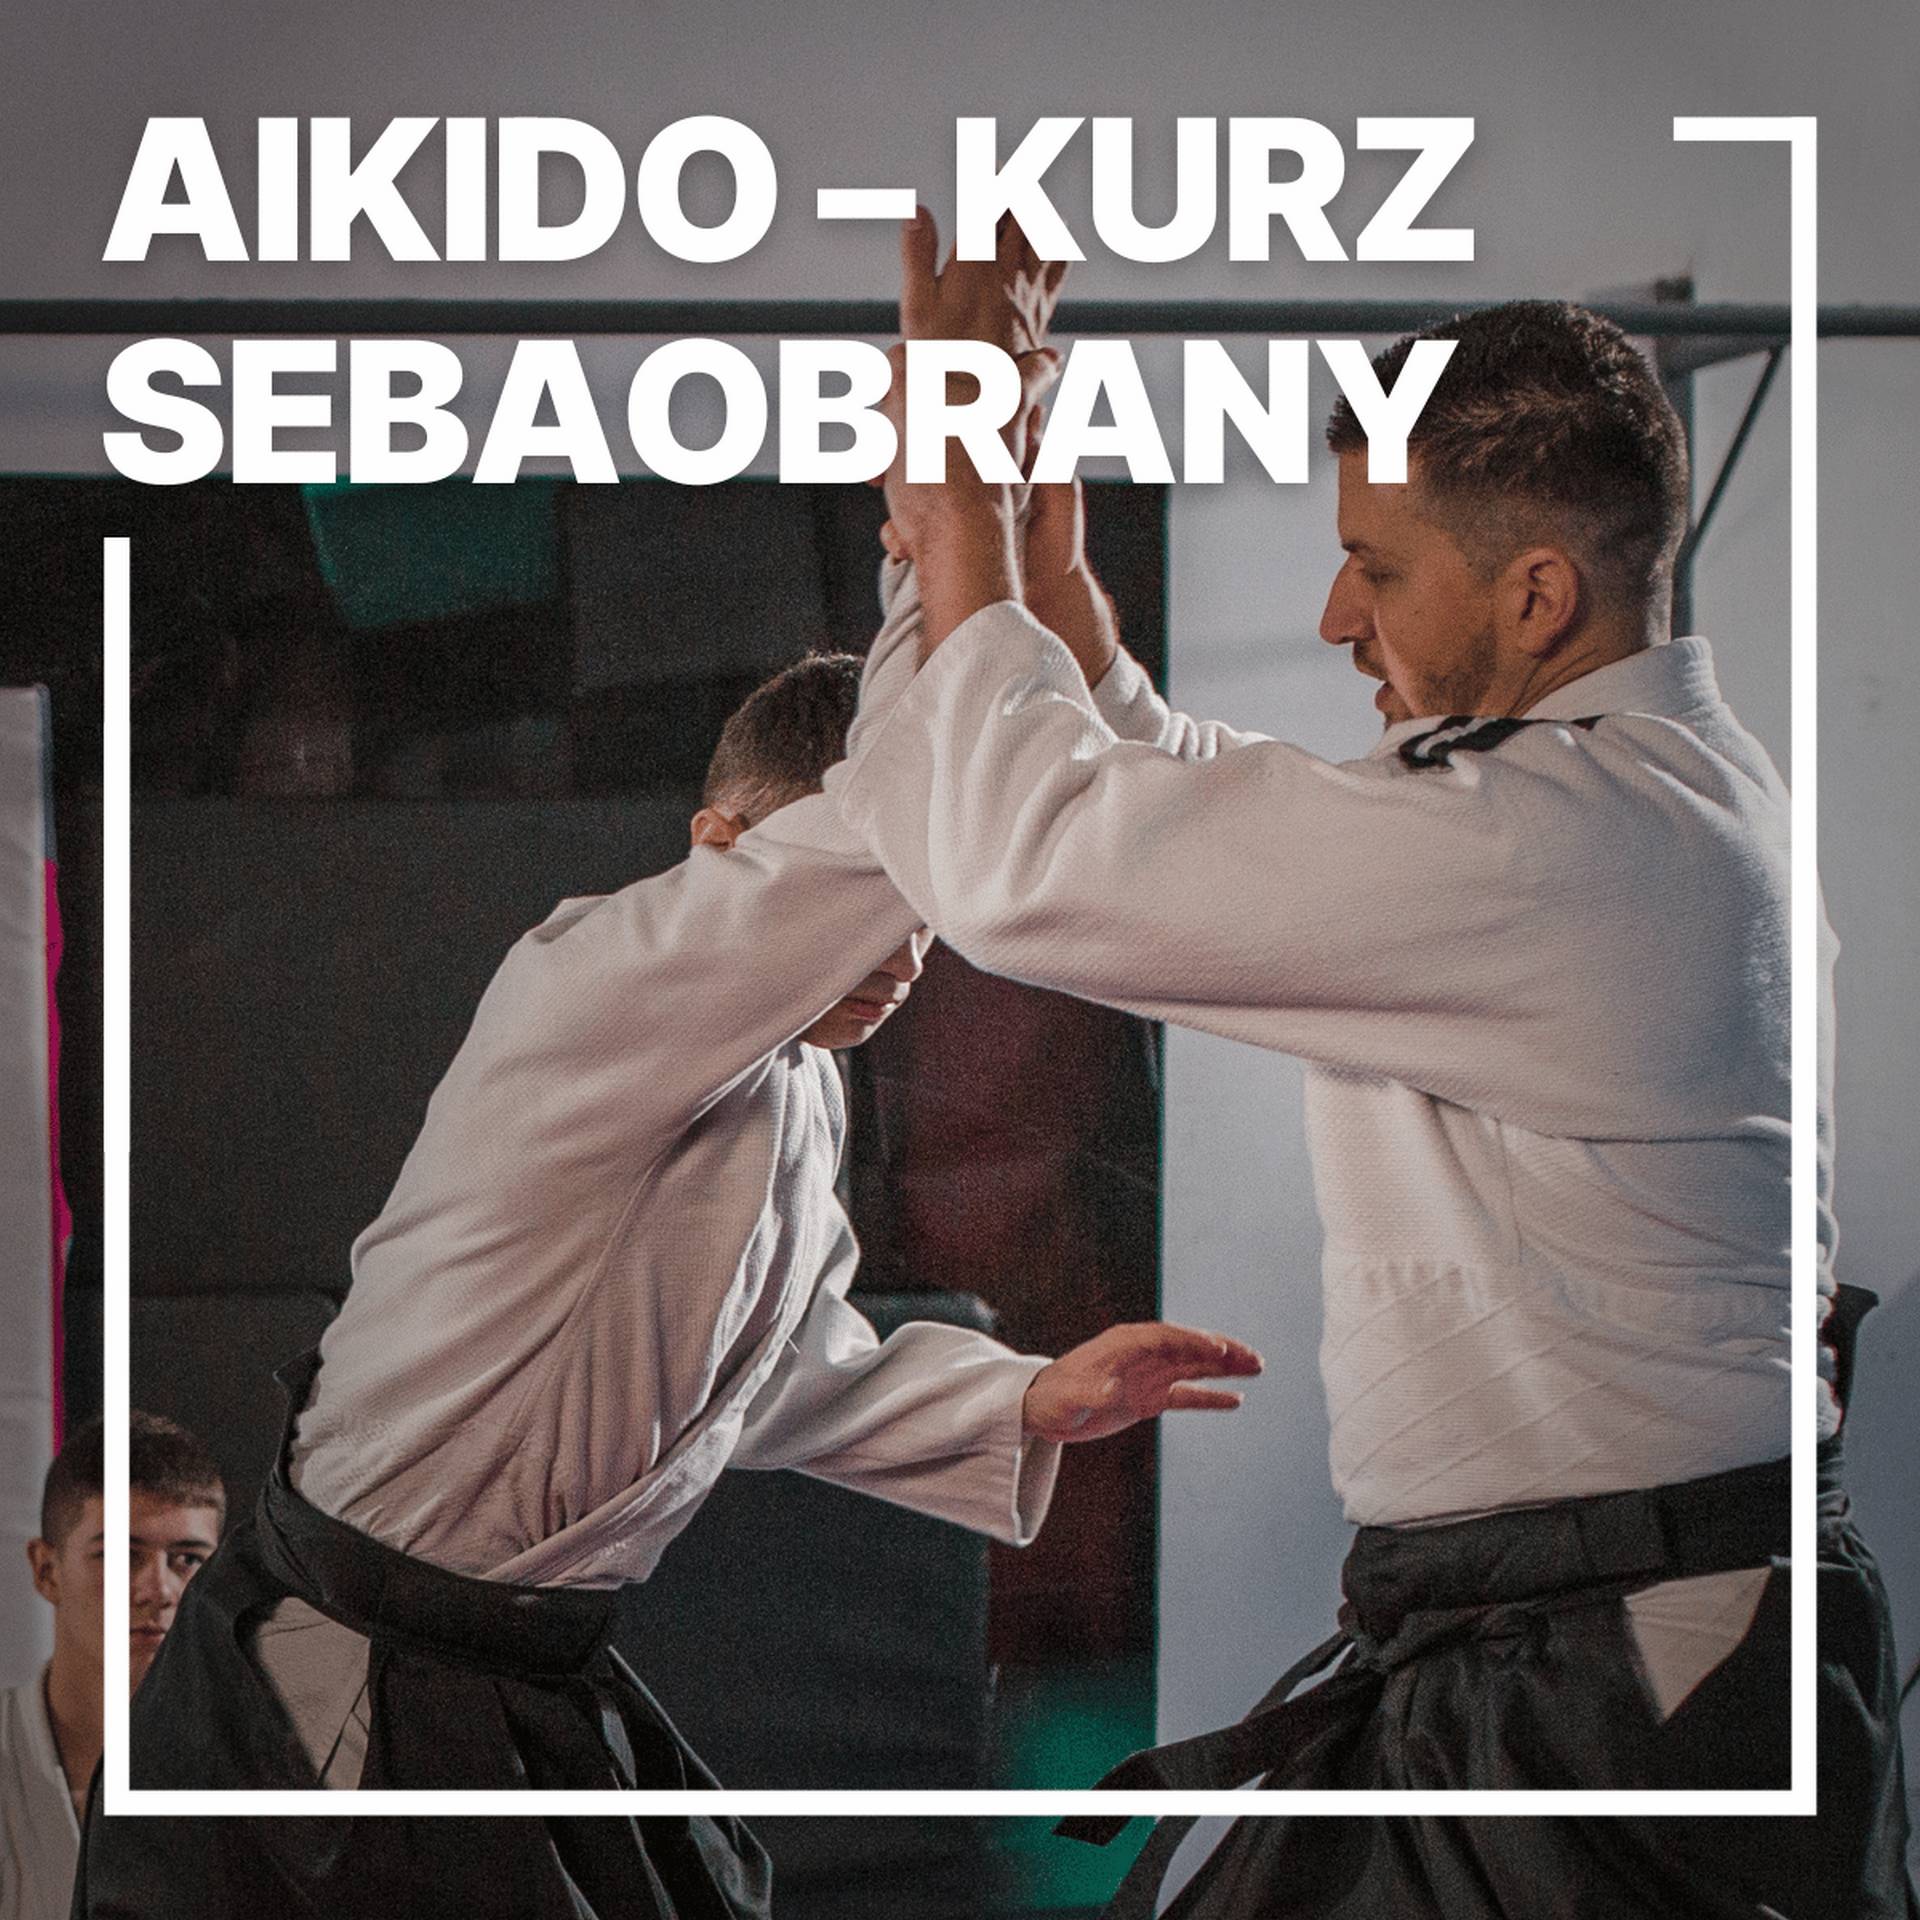 Aikido kurz sebaobrany - Global Education Centre